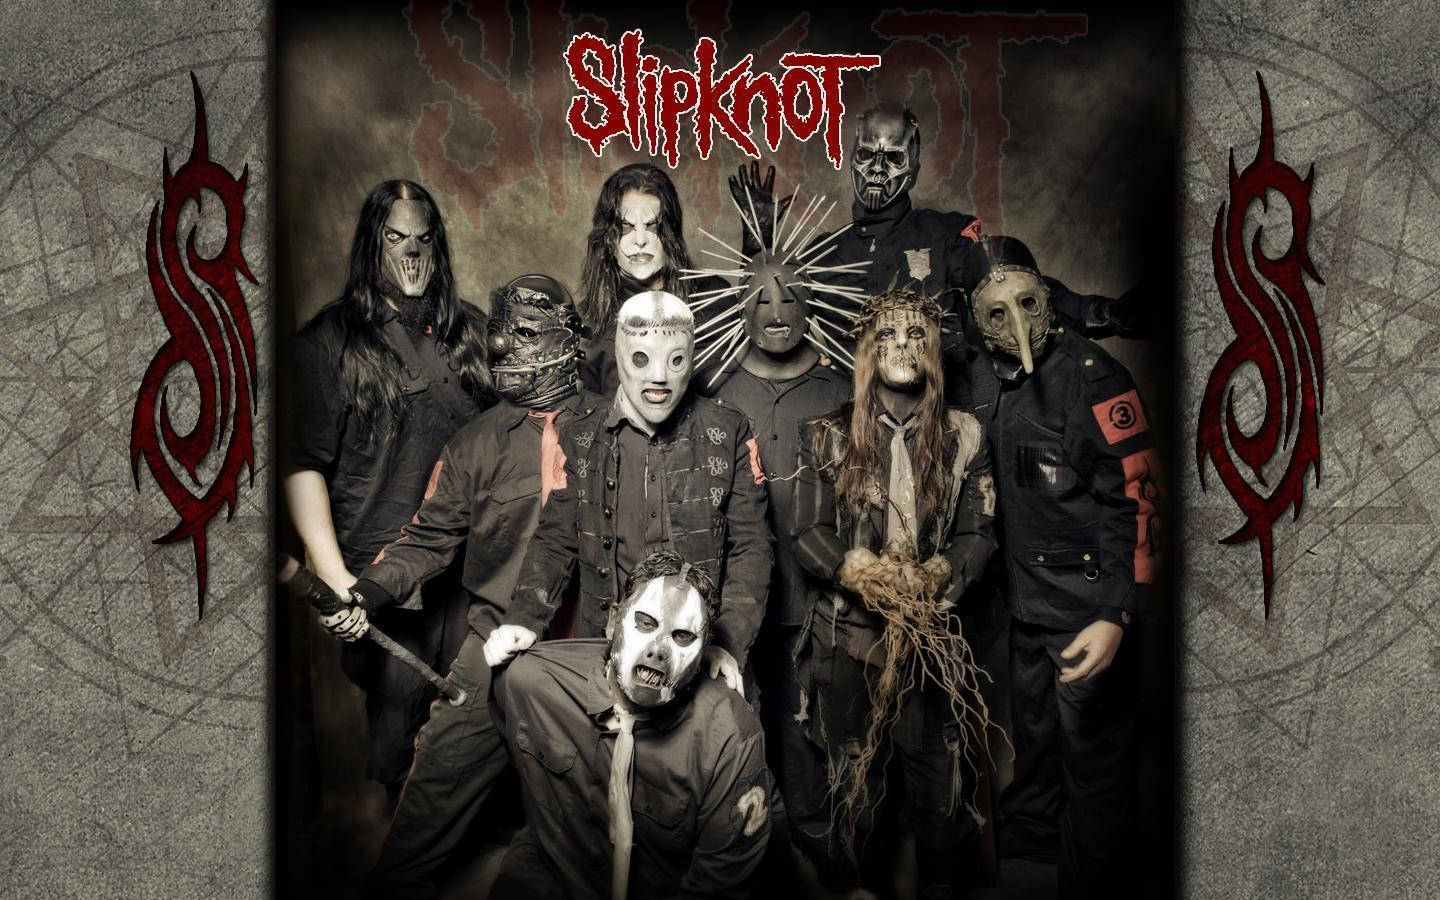 Classic-Looking Slipknot Album Cover Wallpaper